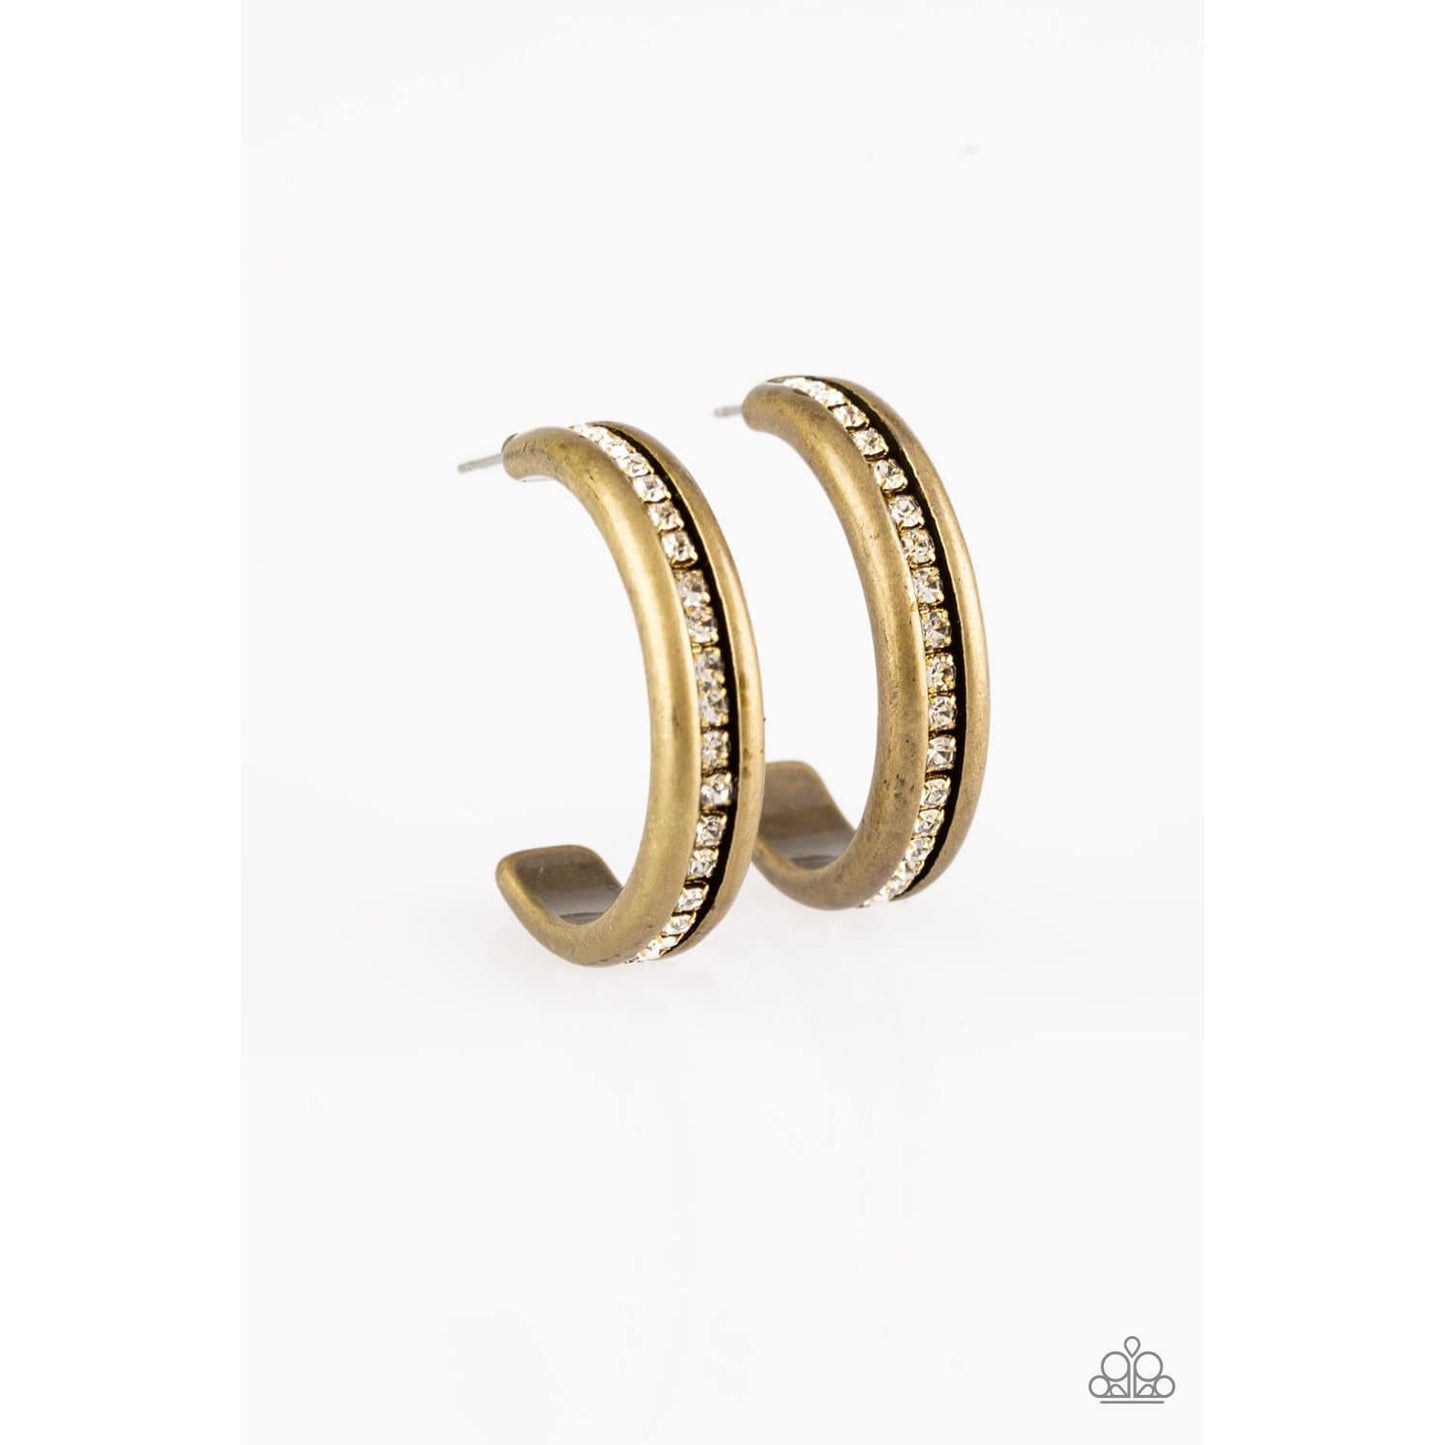 5th Avenue Fashionista - Brass Rhinestone Hoop Earrings - Paparazzi Accessories - GlaMarous Titi Jewels